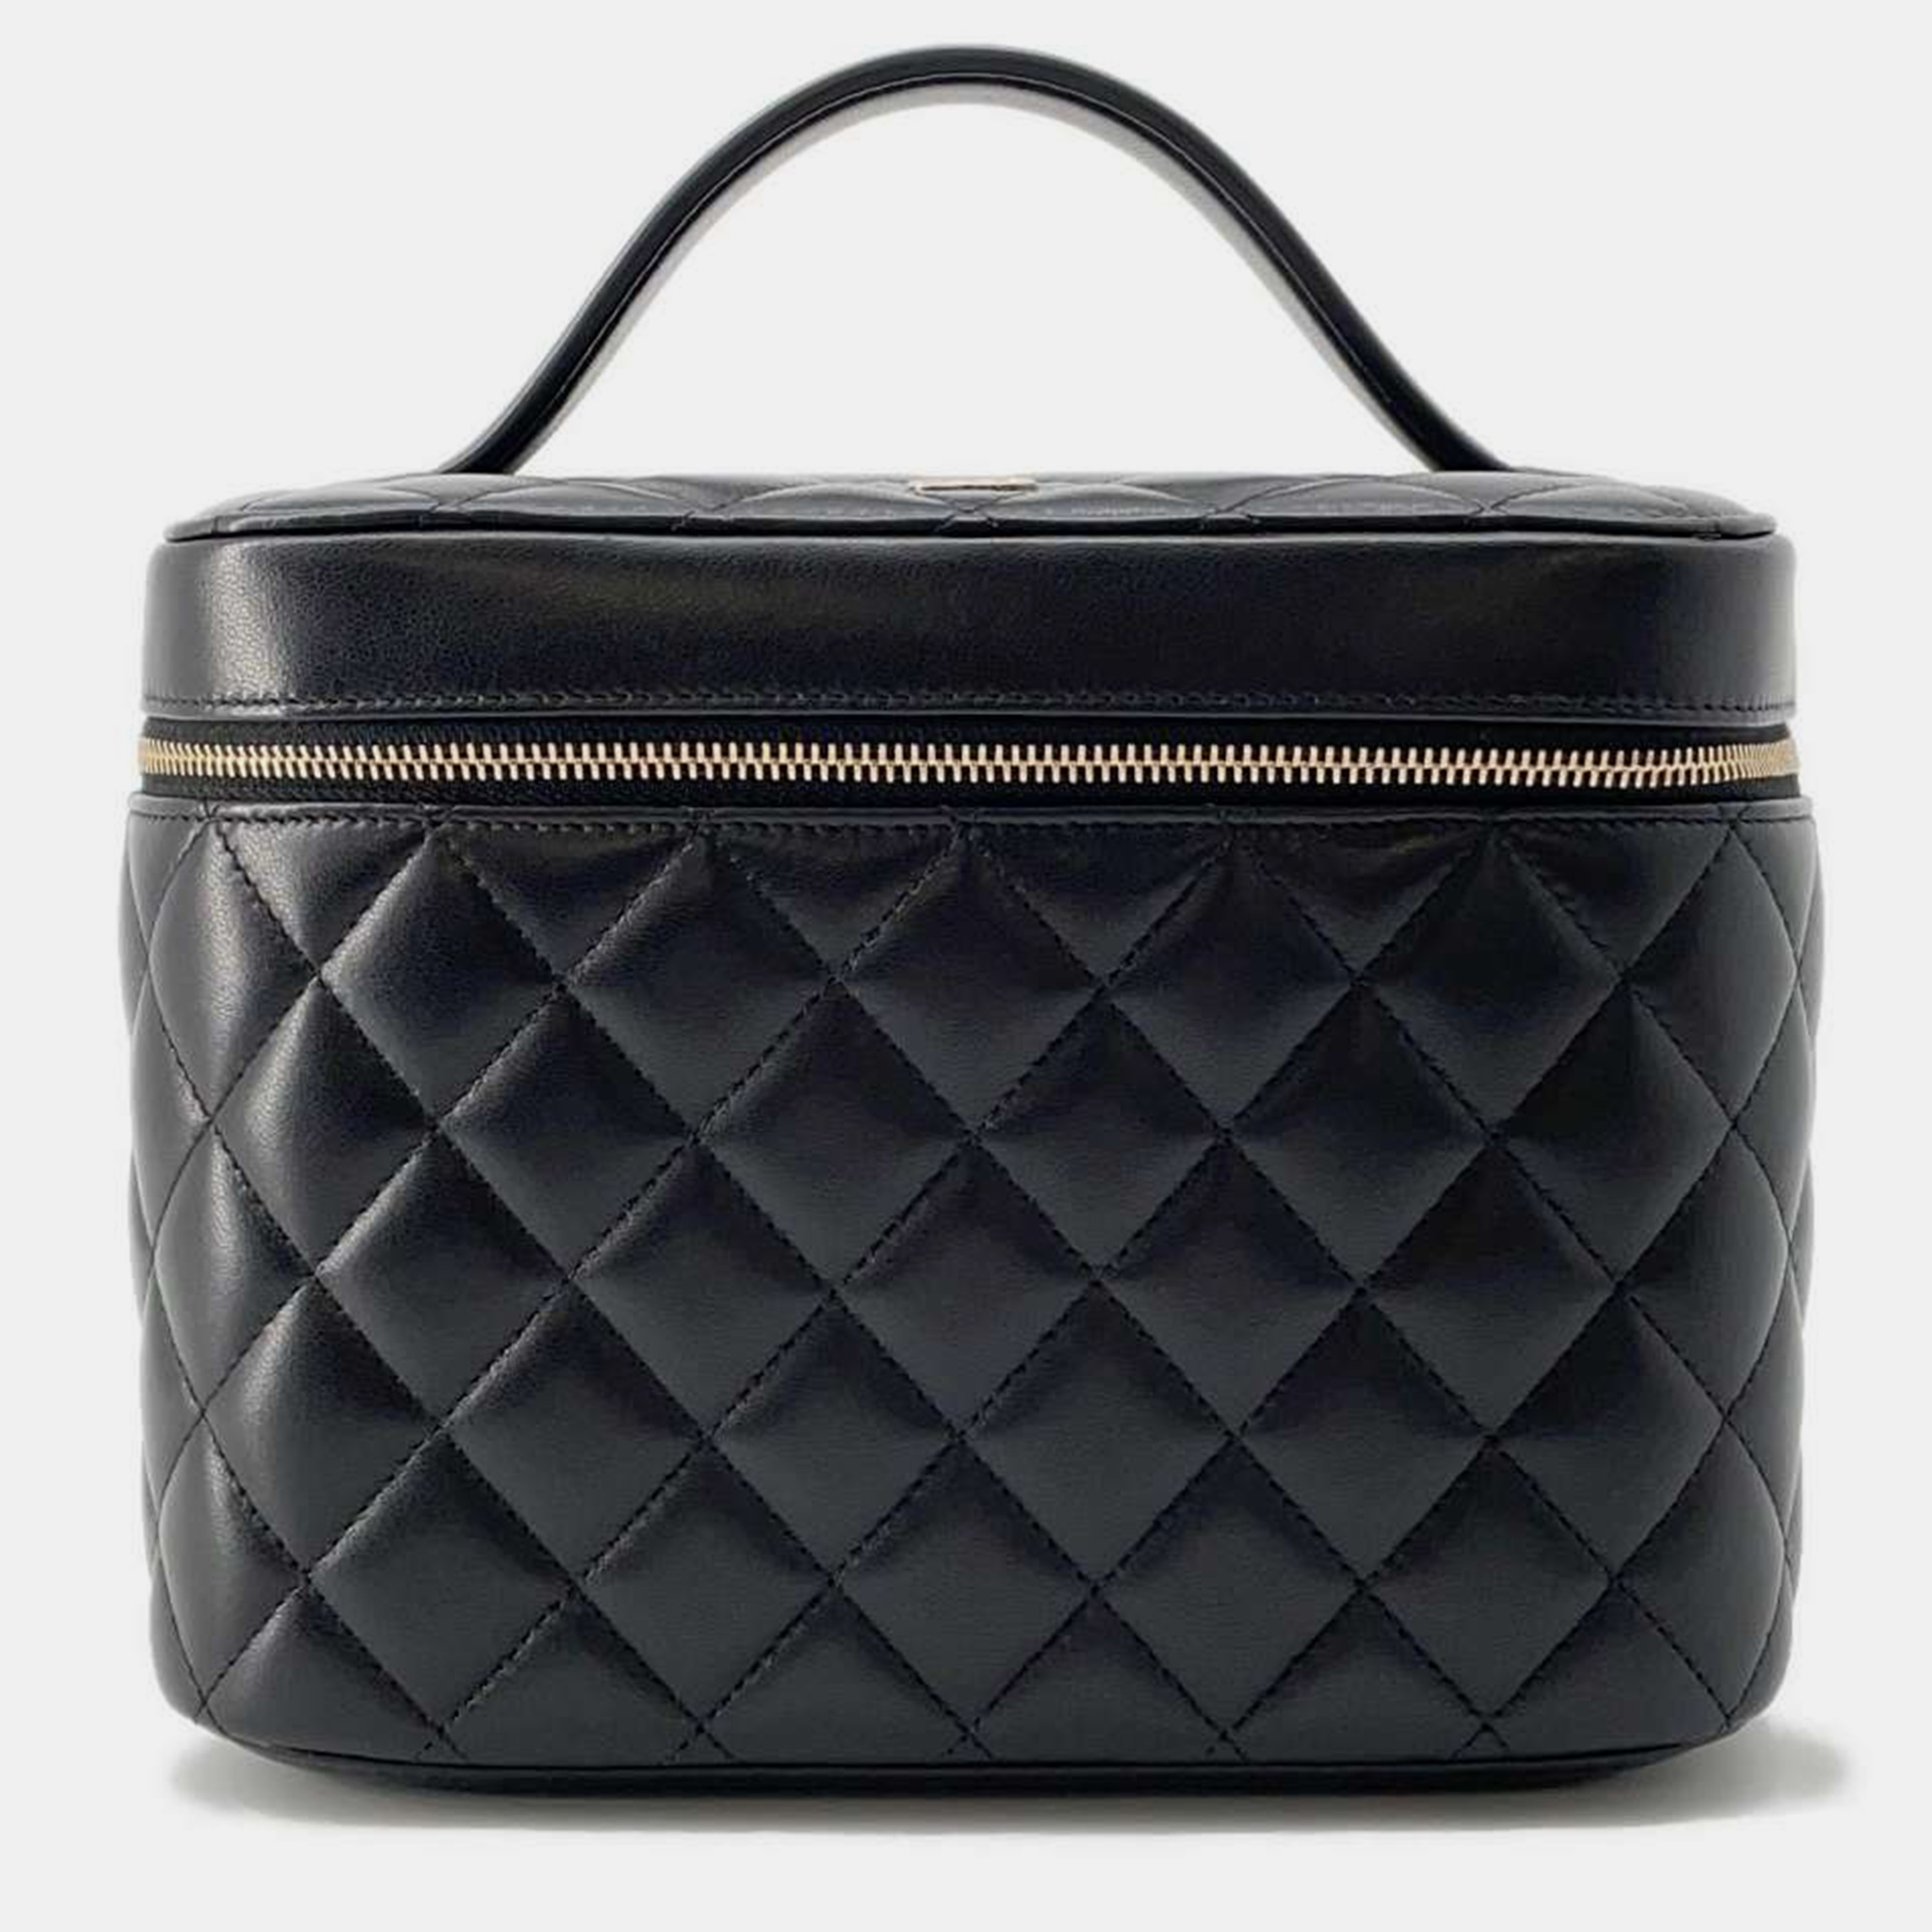 Chanel black leather  vanity case clutch